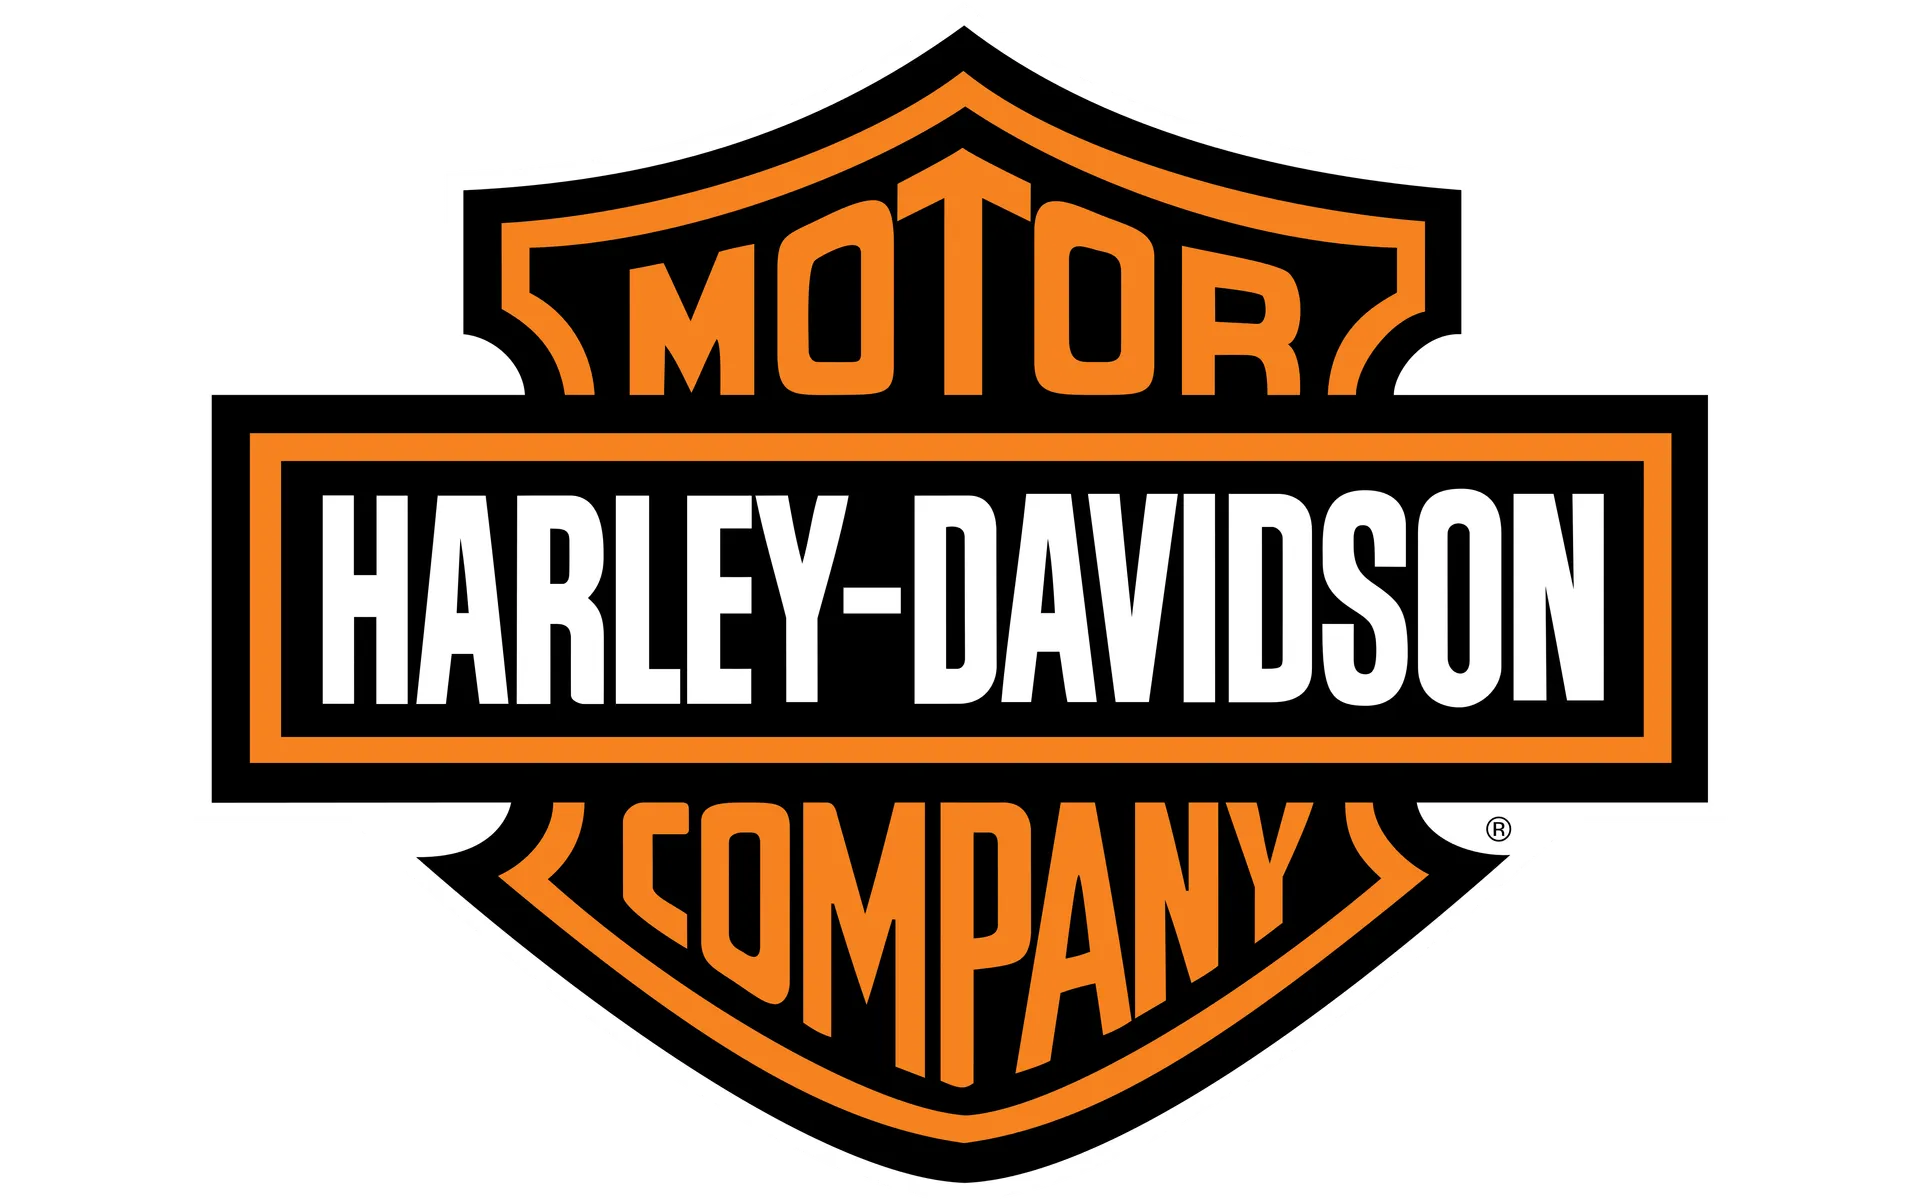 HARLEY DAVIDSON logo de circulaires